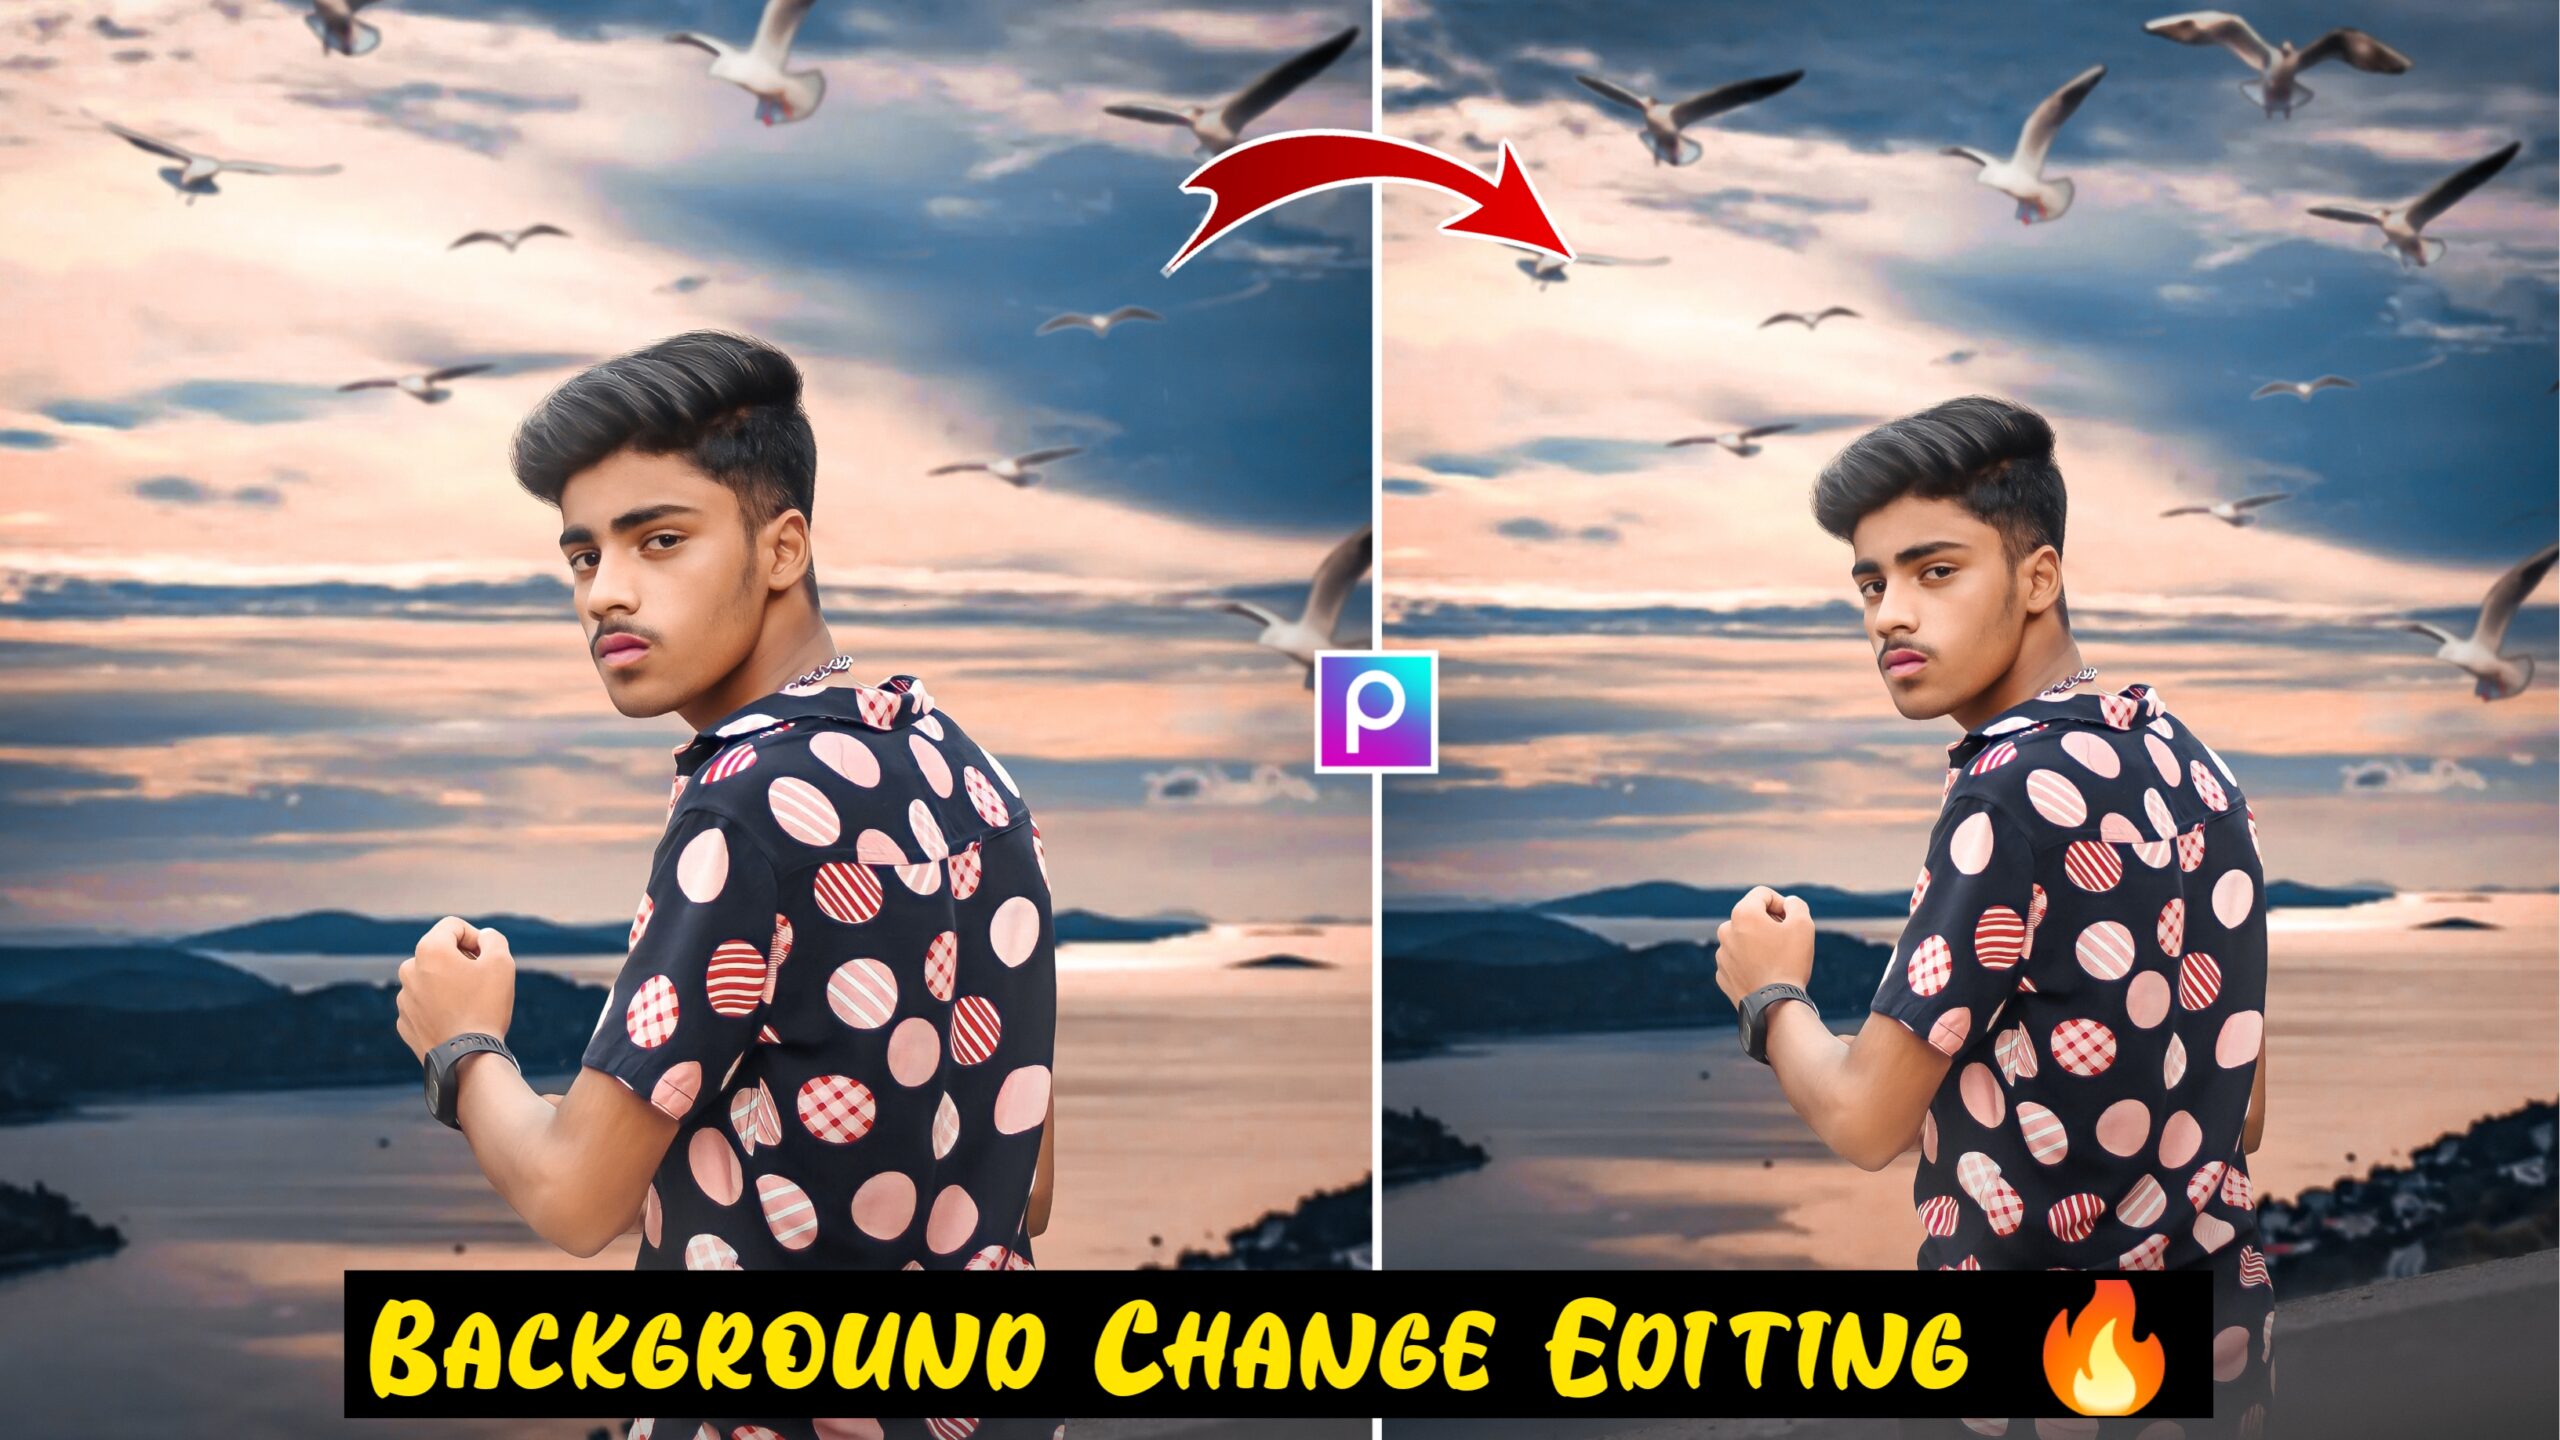 Background Change Editing In PicsArt Download Background & PNG - Tahir Editz